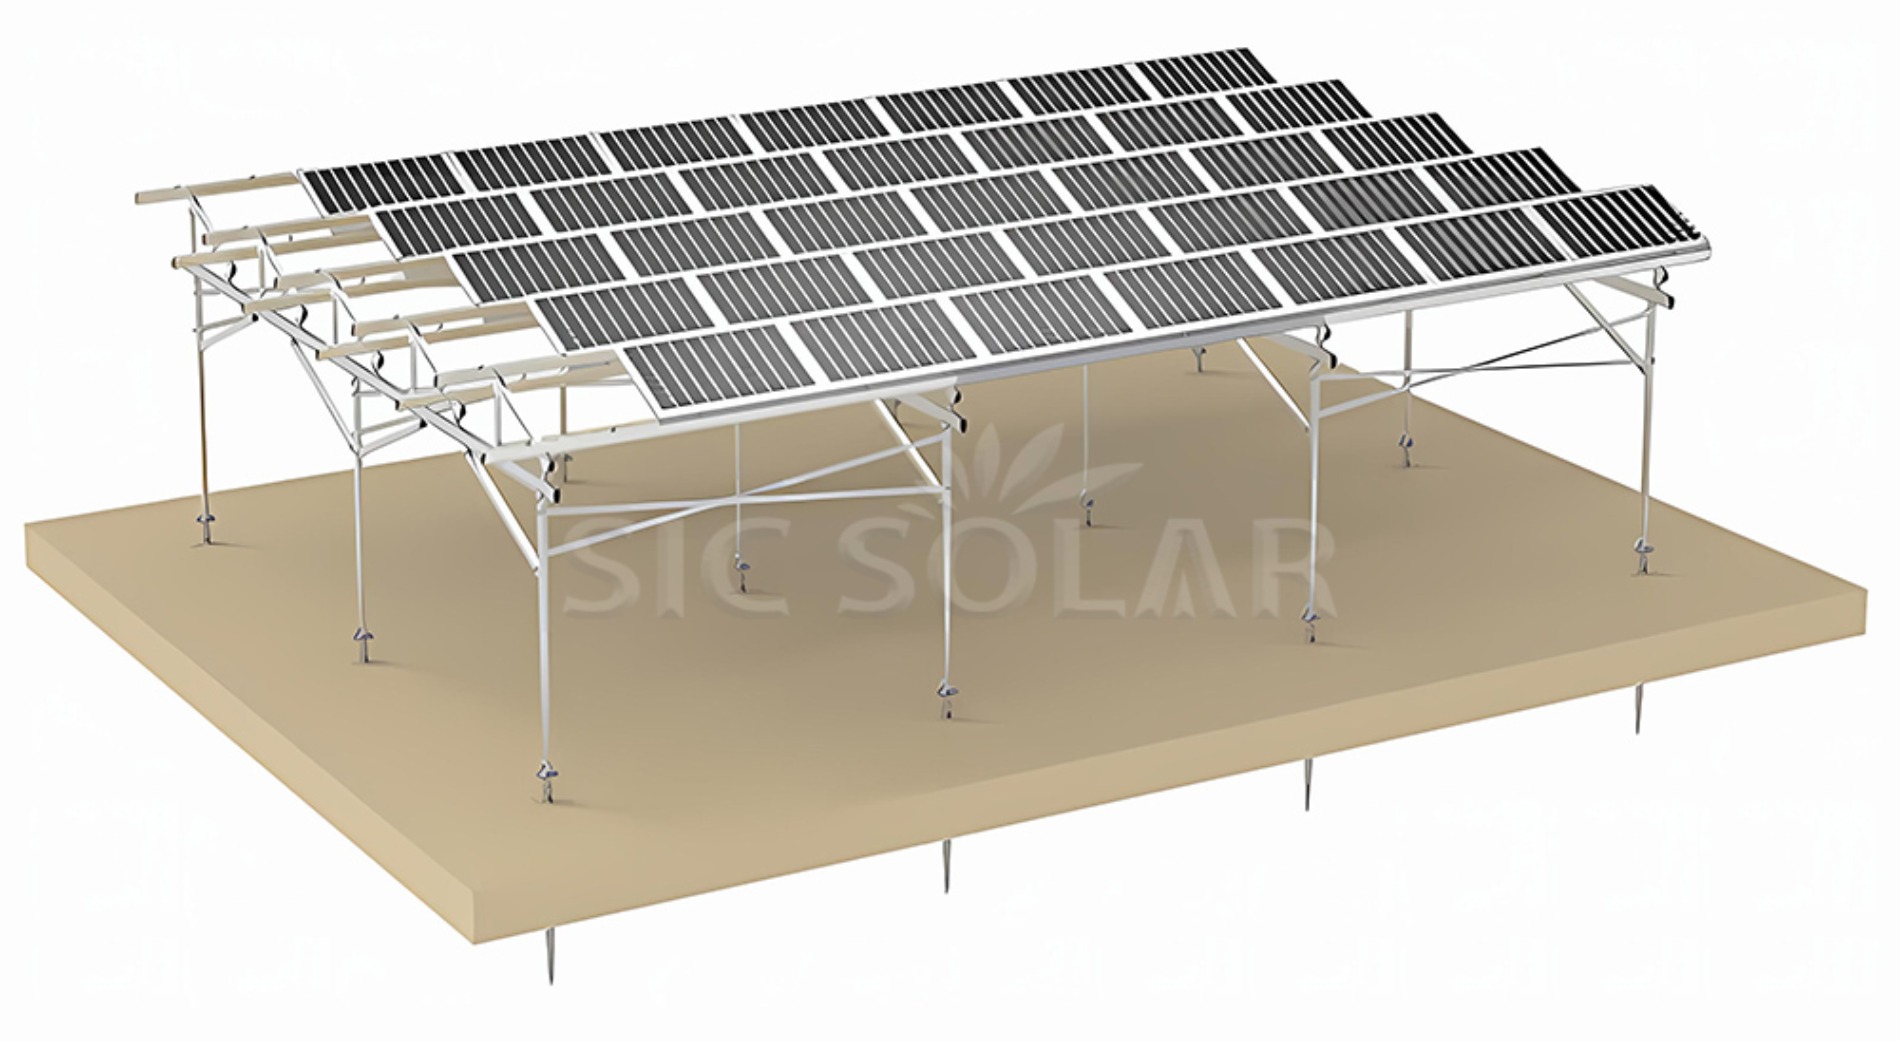 Dual tilt solar farm mounting